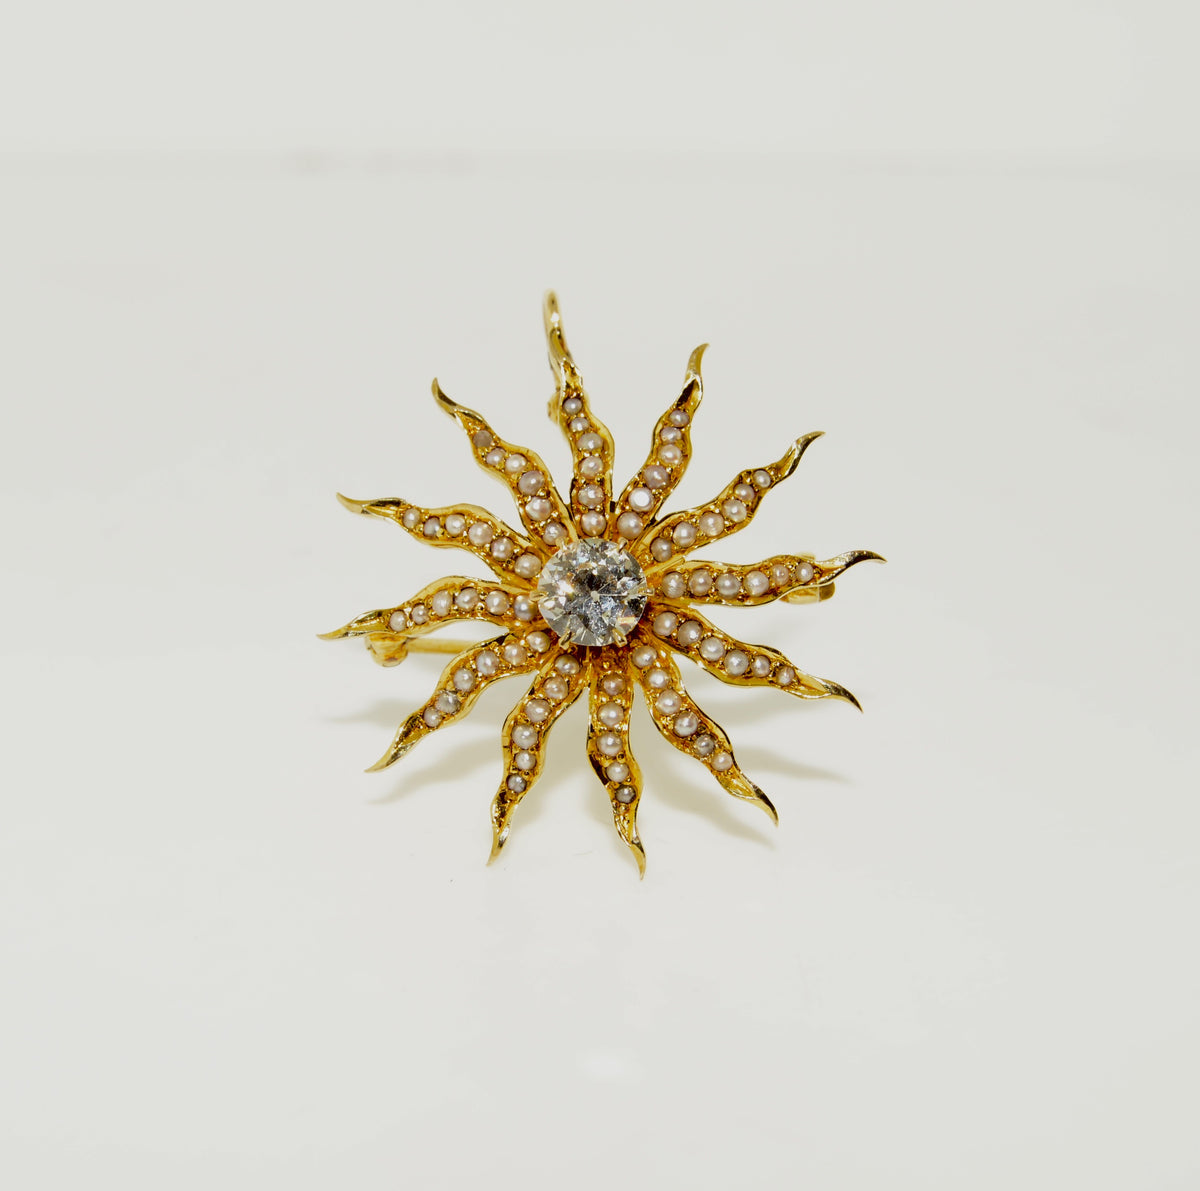 14K Antique Sunburst Brooch/Pendant with a Diamond